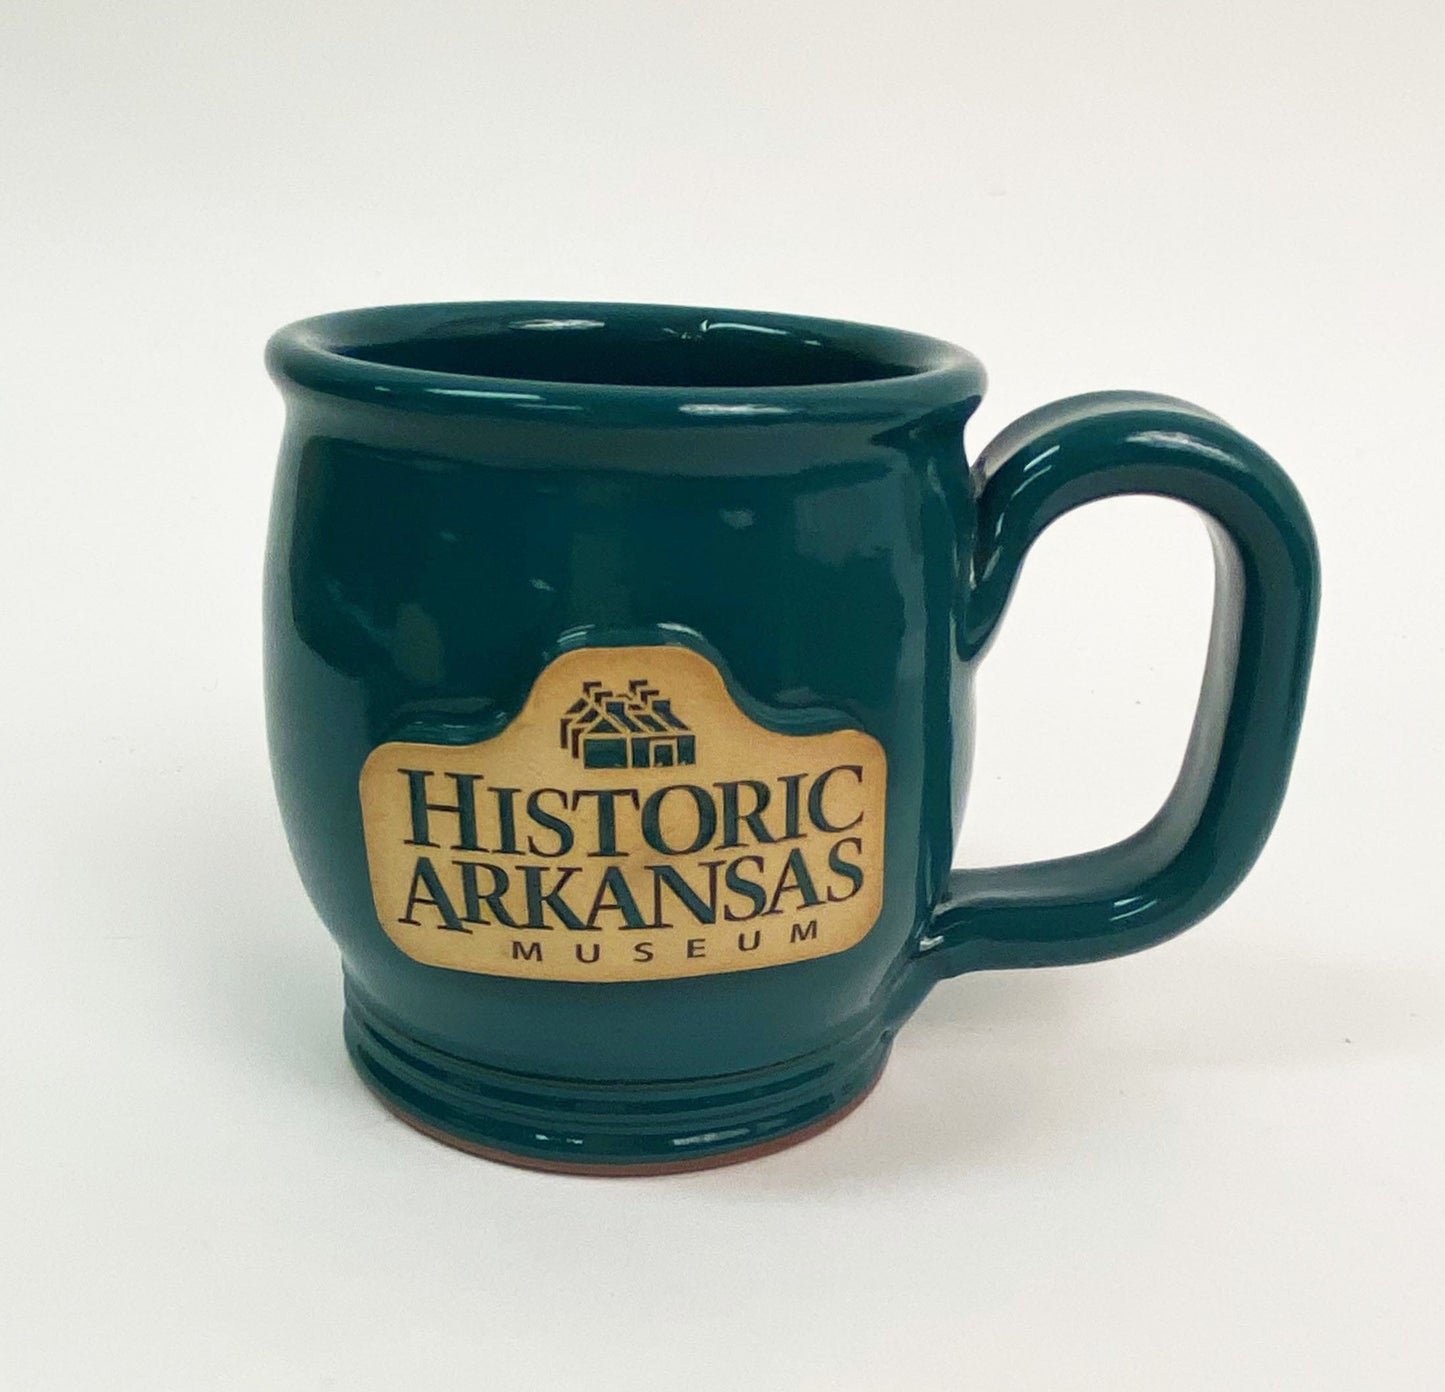 Historic Arkansas Museum teal mug